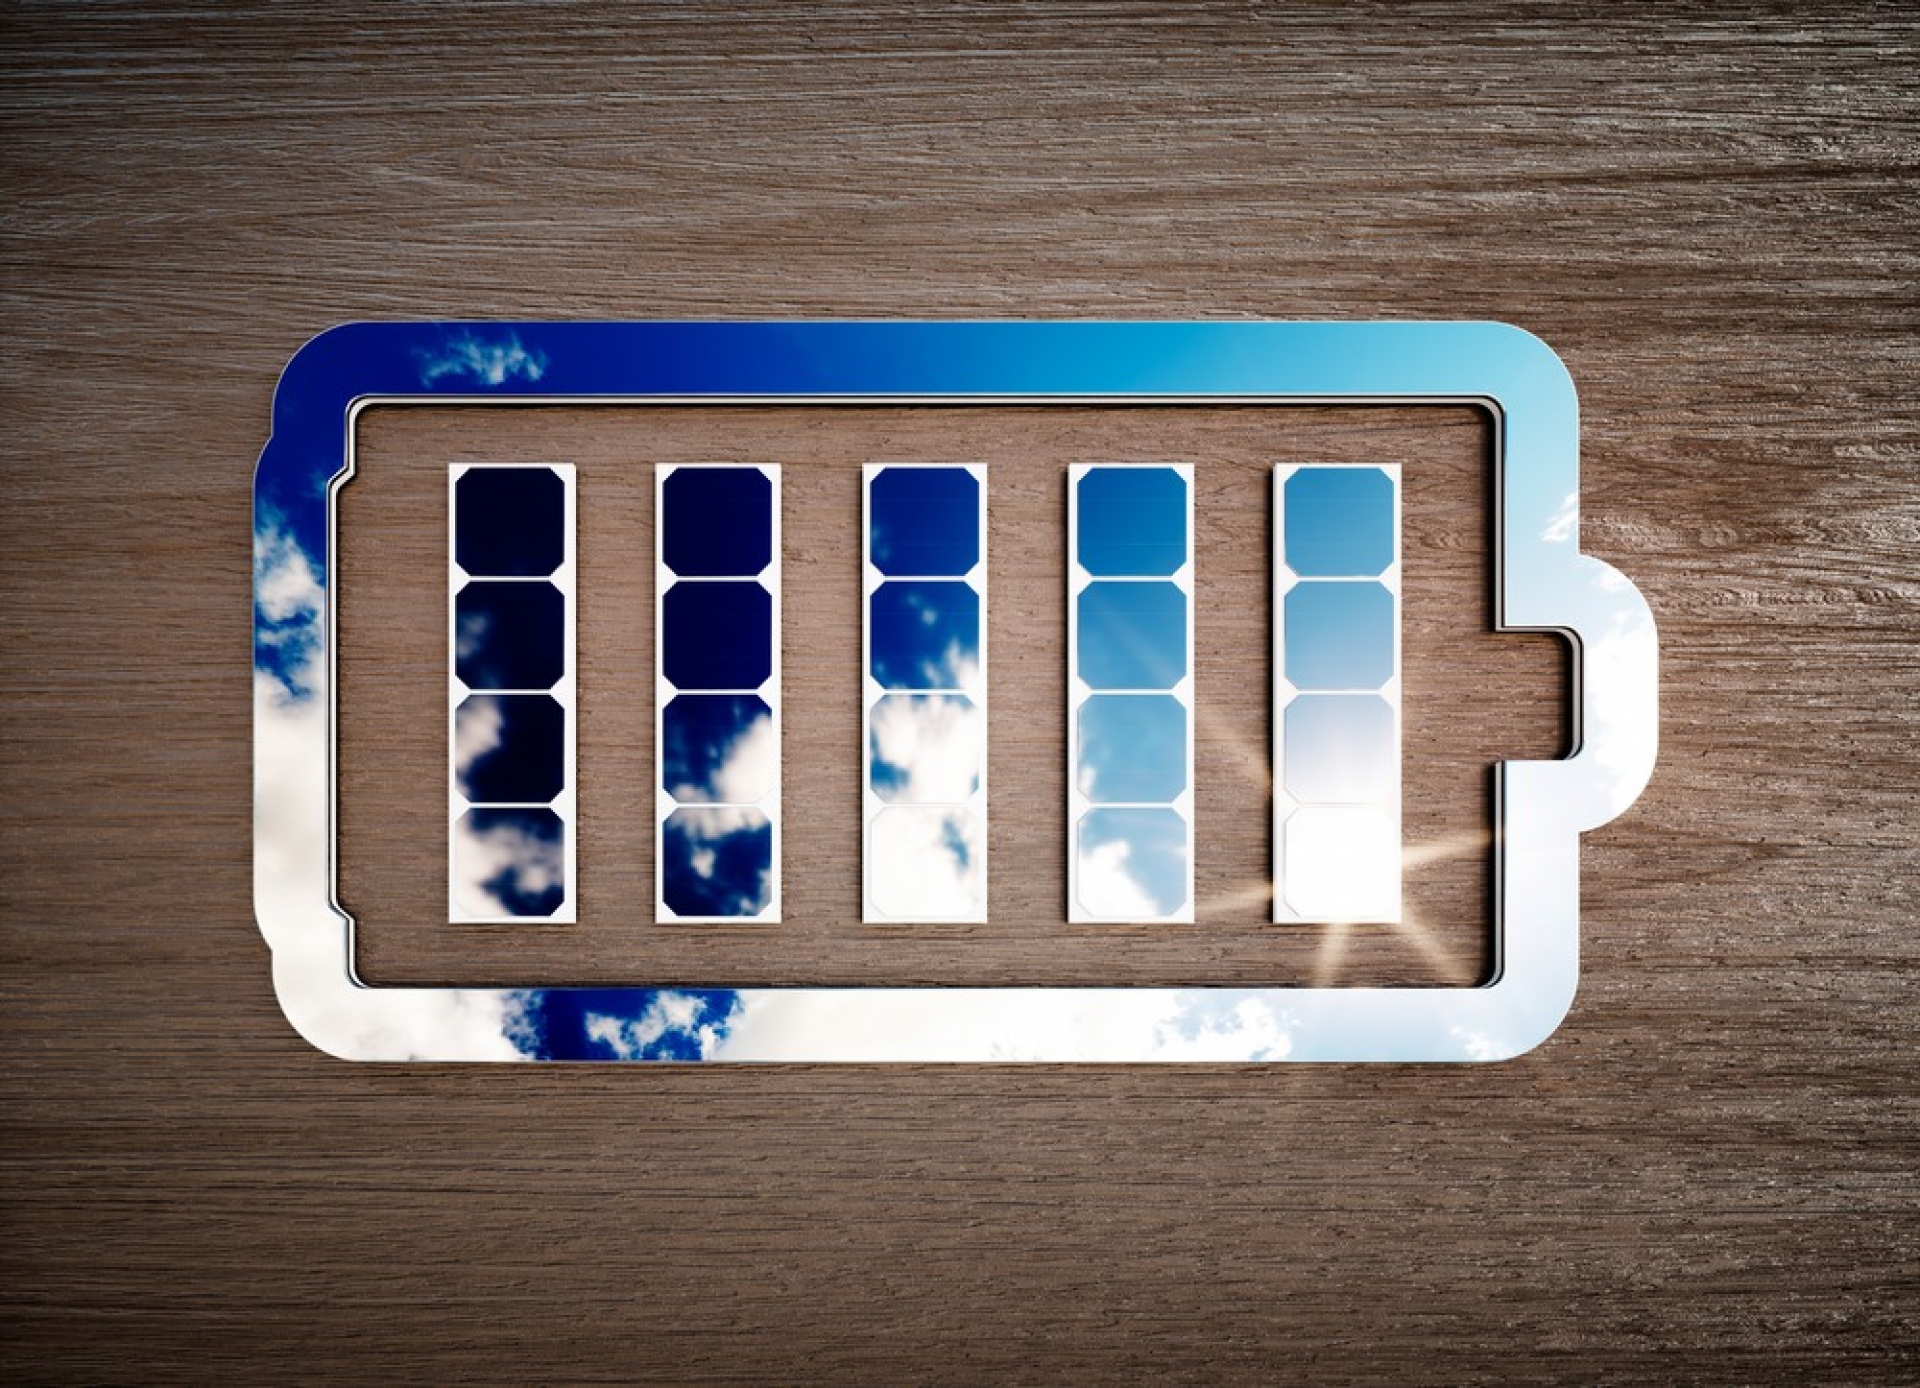 Battery Storage Solar